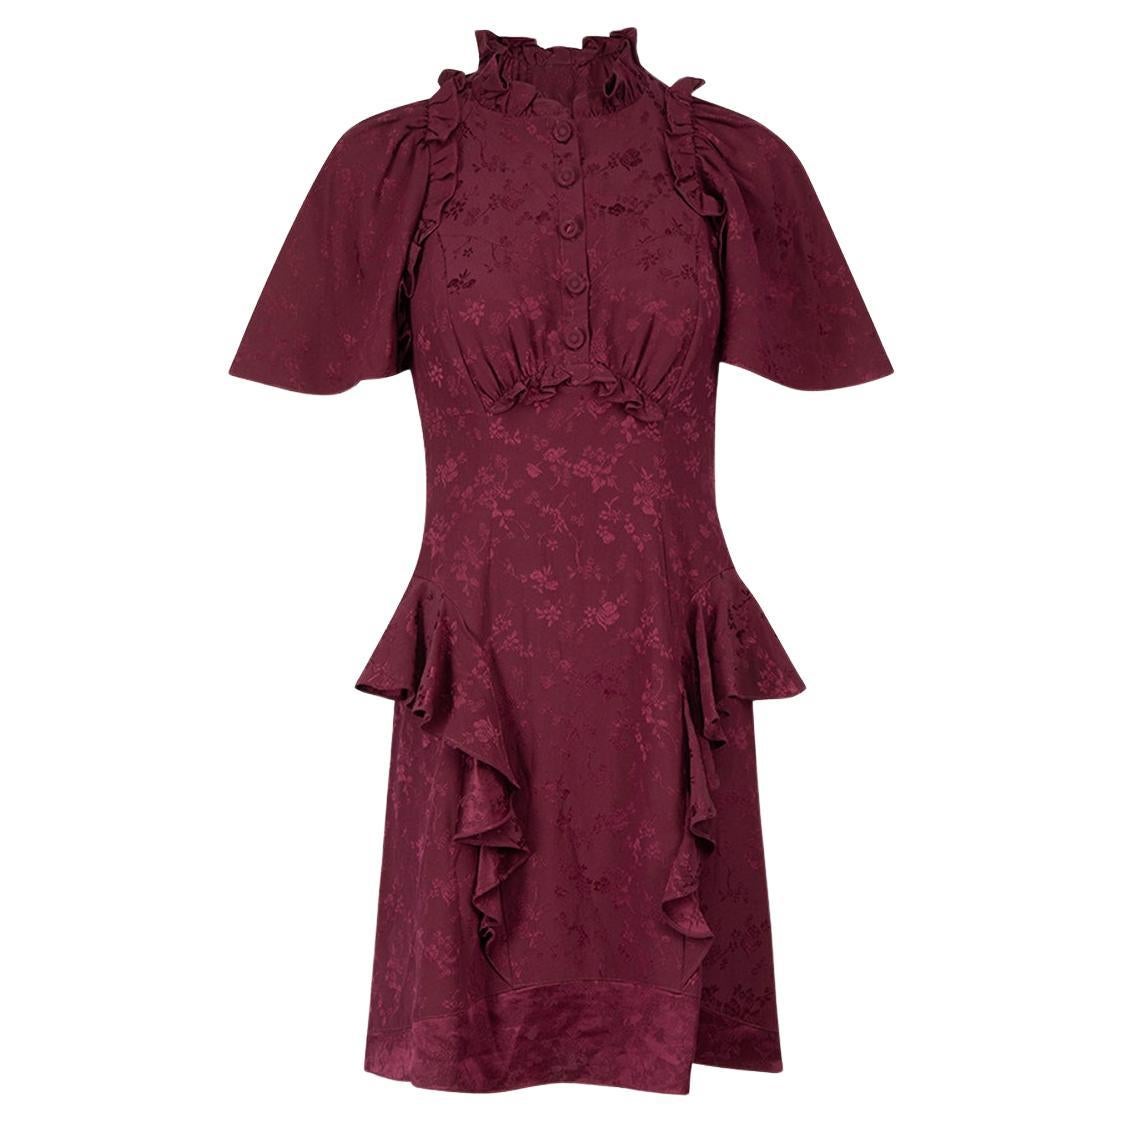 Mayle Burgundy Floral Jacquard Open Back Dress Size M For Sale